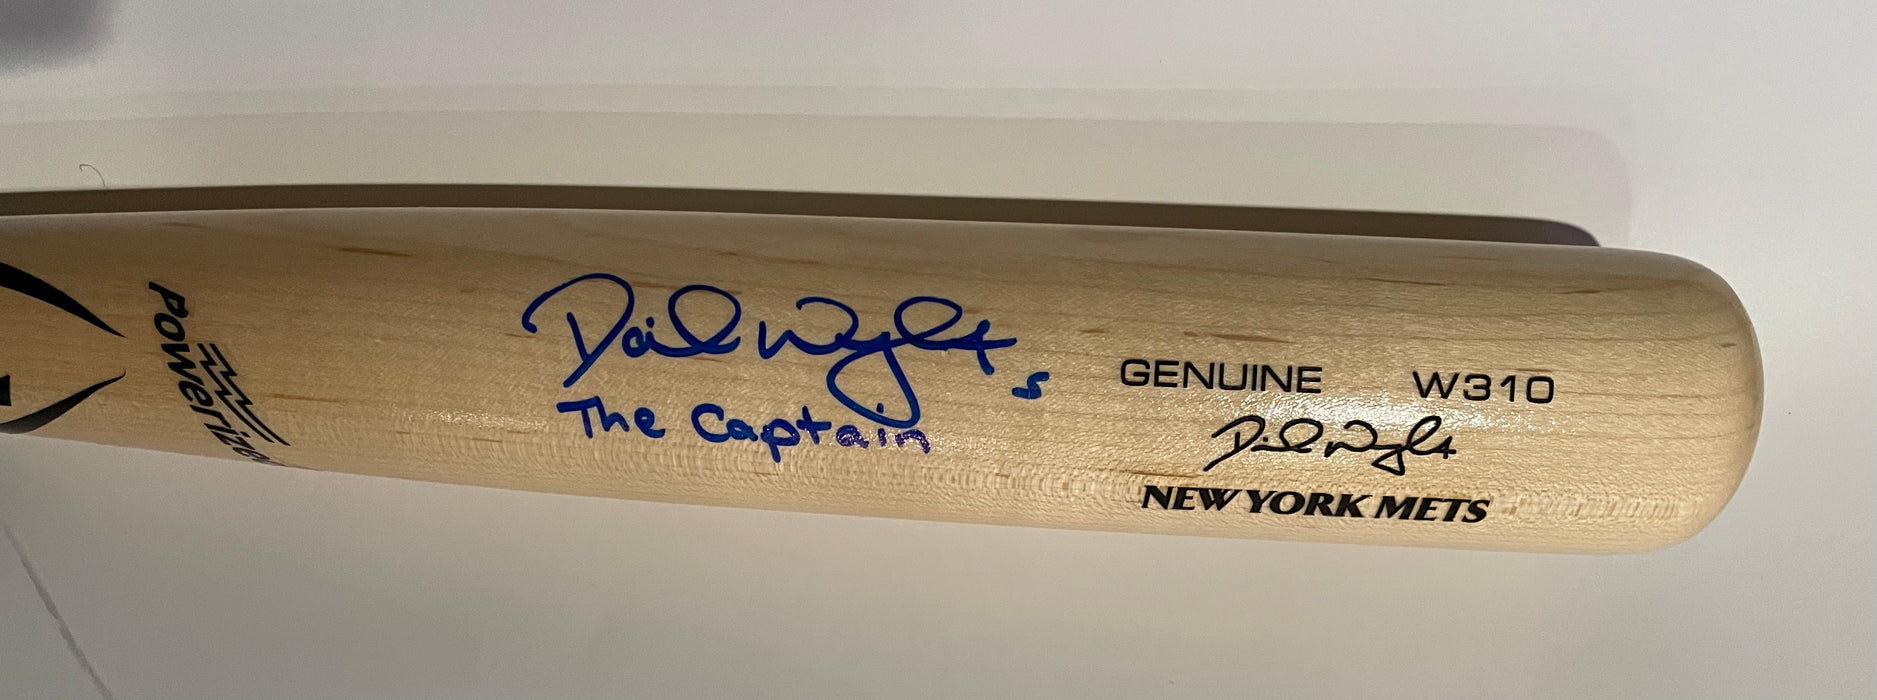 David Wright Autographed Louisville Slugger Game Model Bat with The Captain Inscription (JSA)